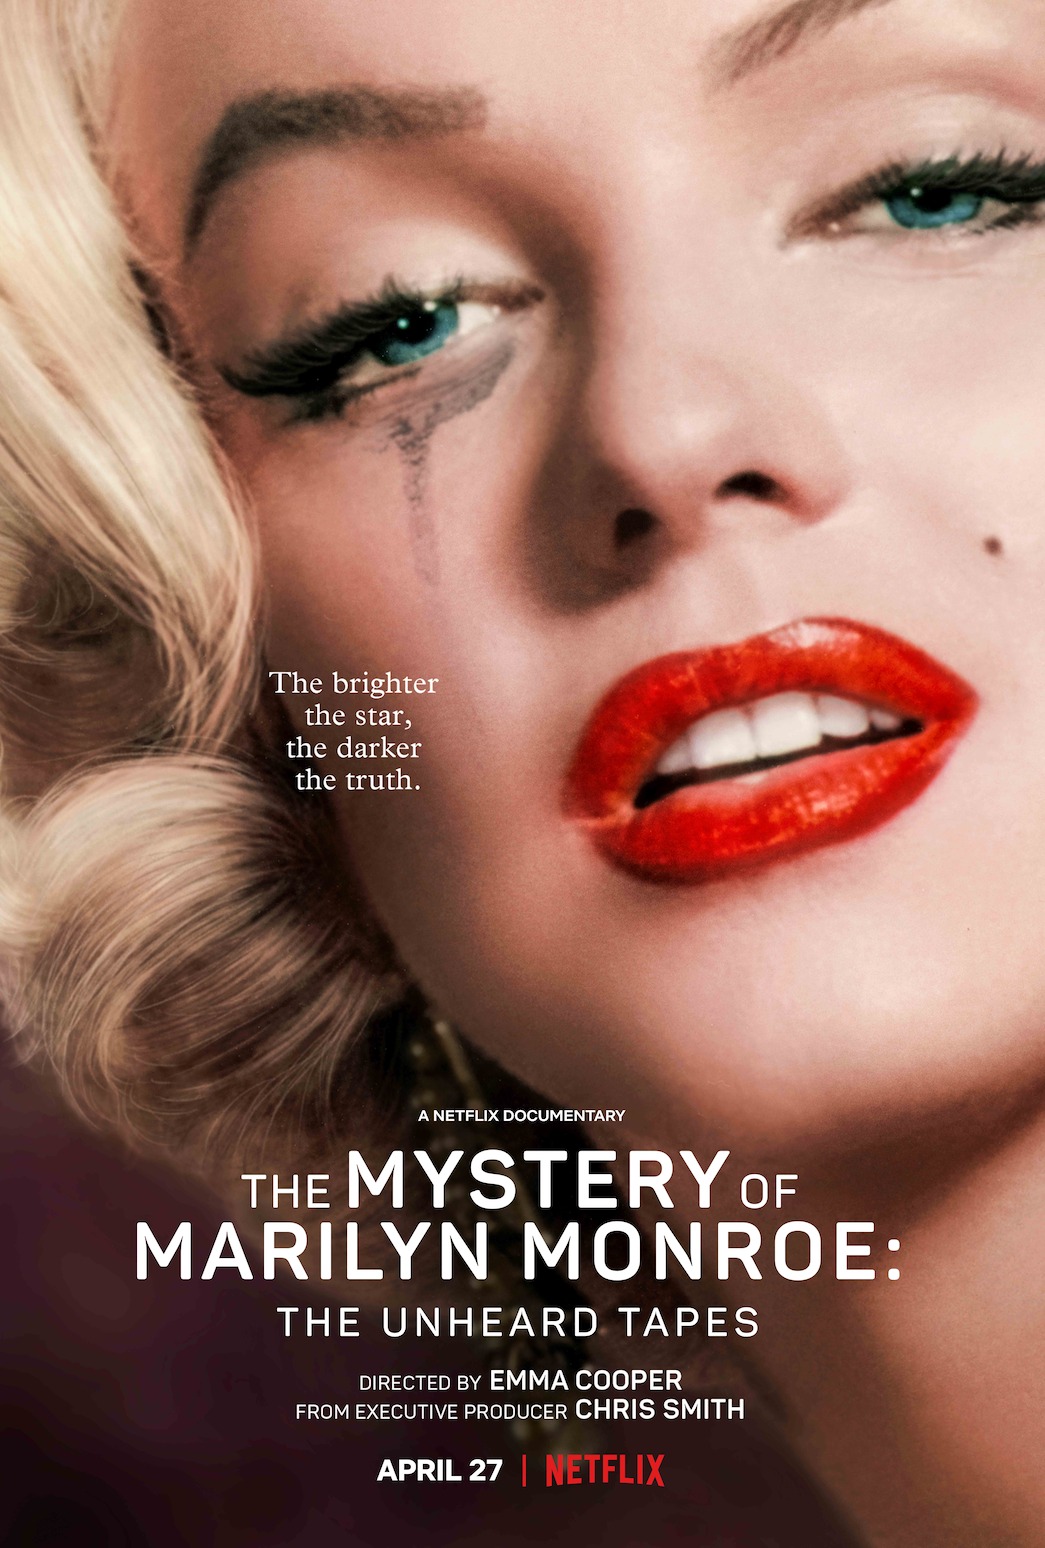 I Segreti Di Marilyn Monroe I Nastri Inediti Trailer Del Documentario Netflix Lega Nerd